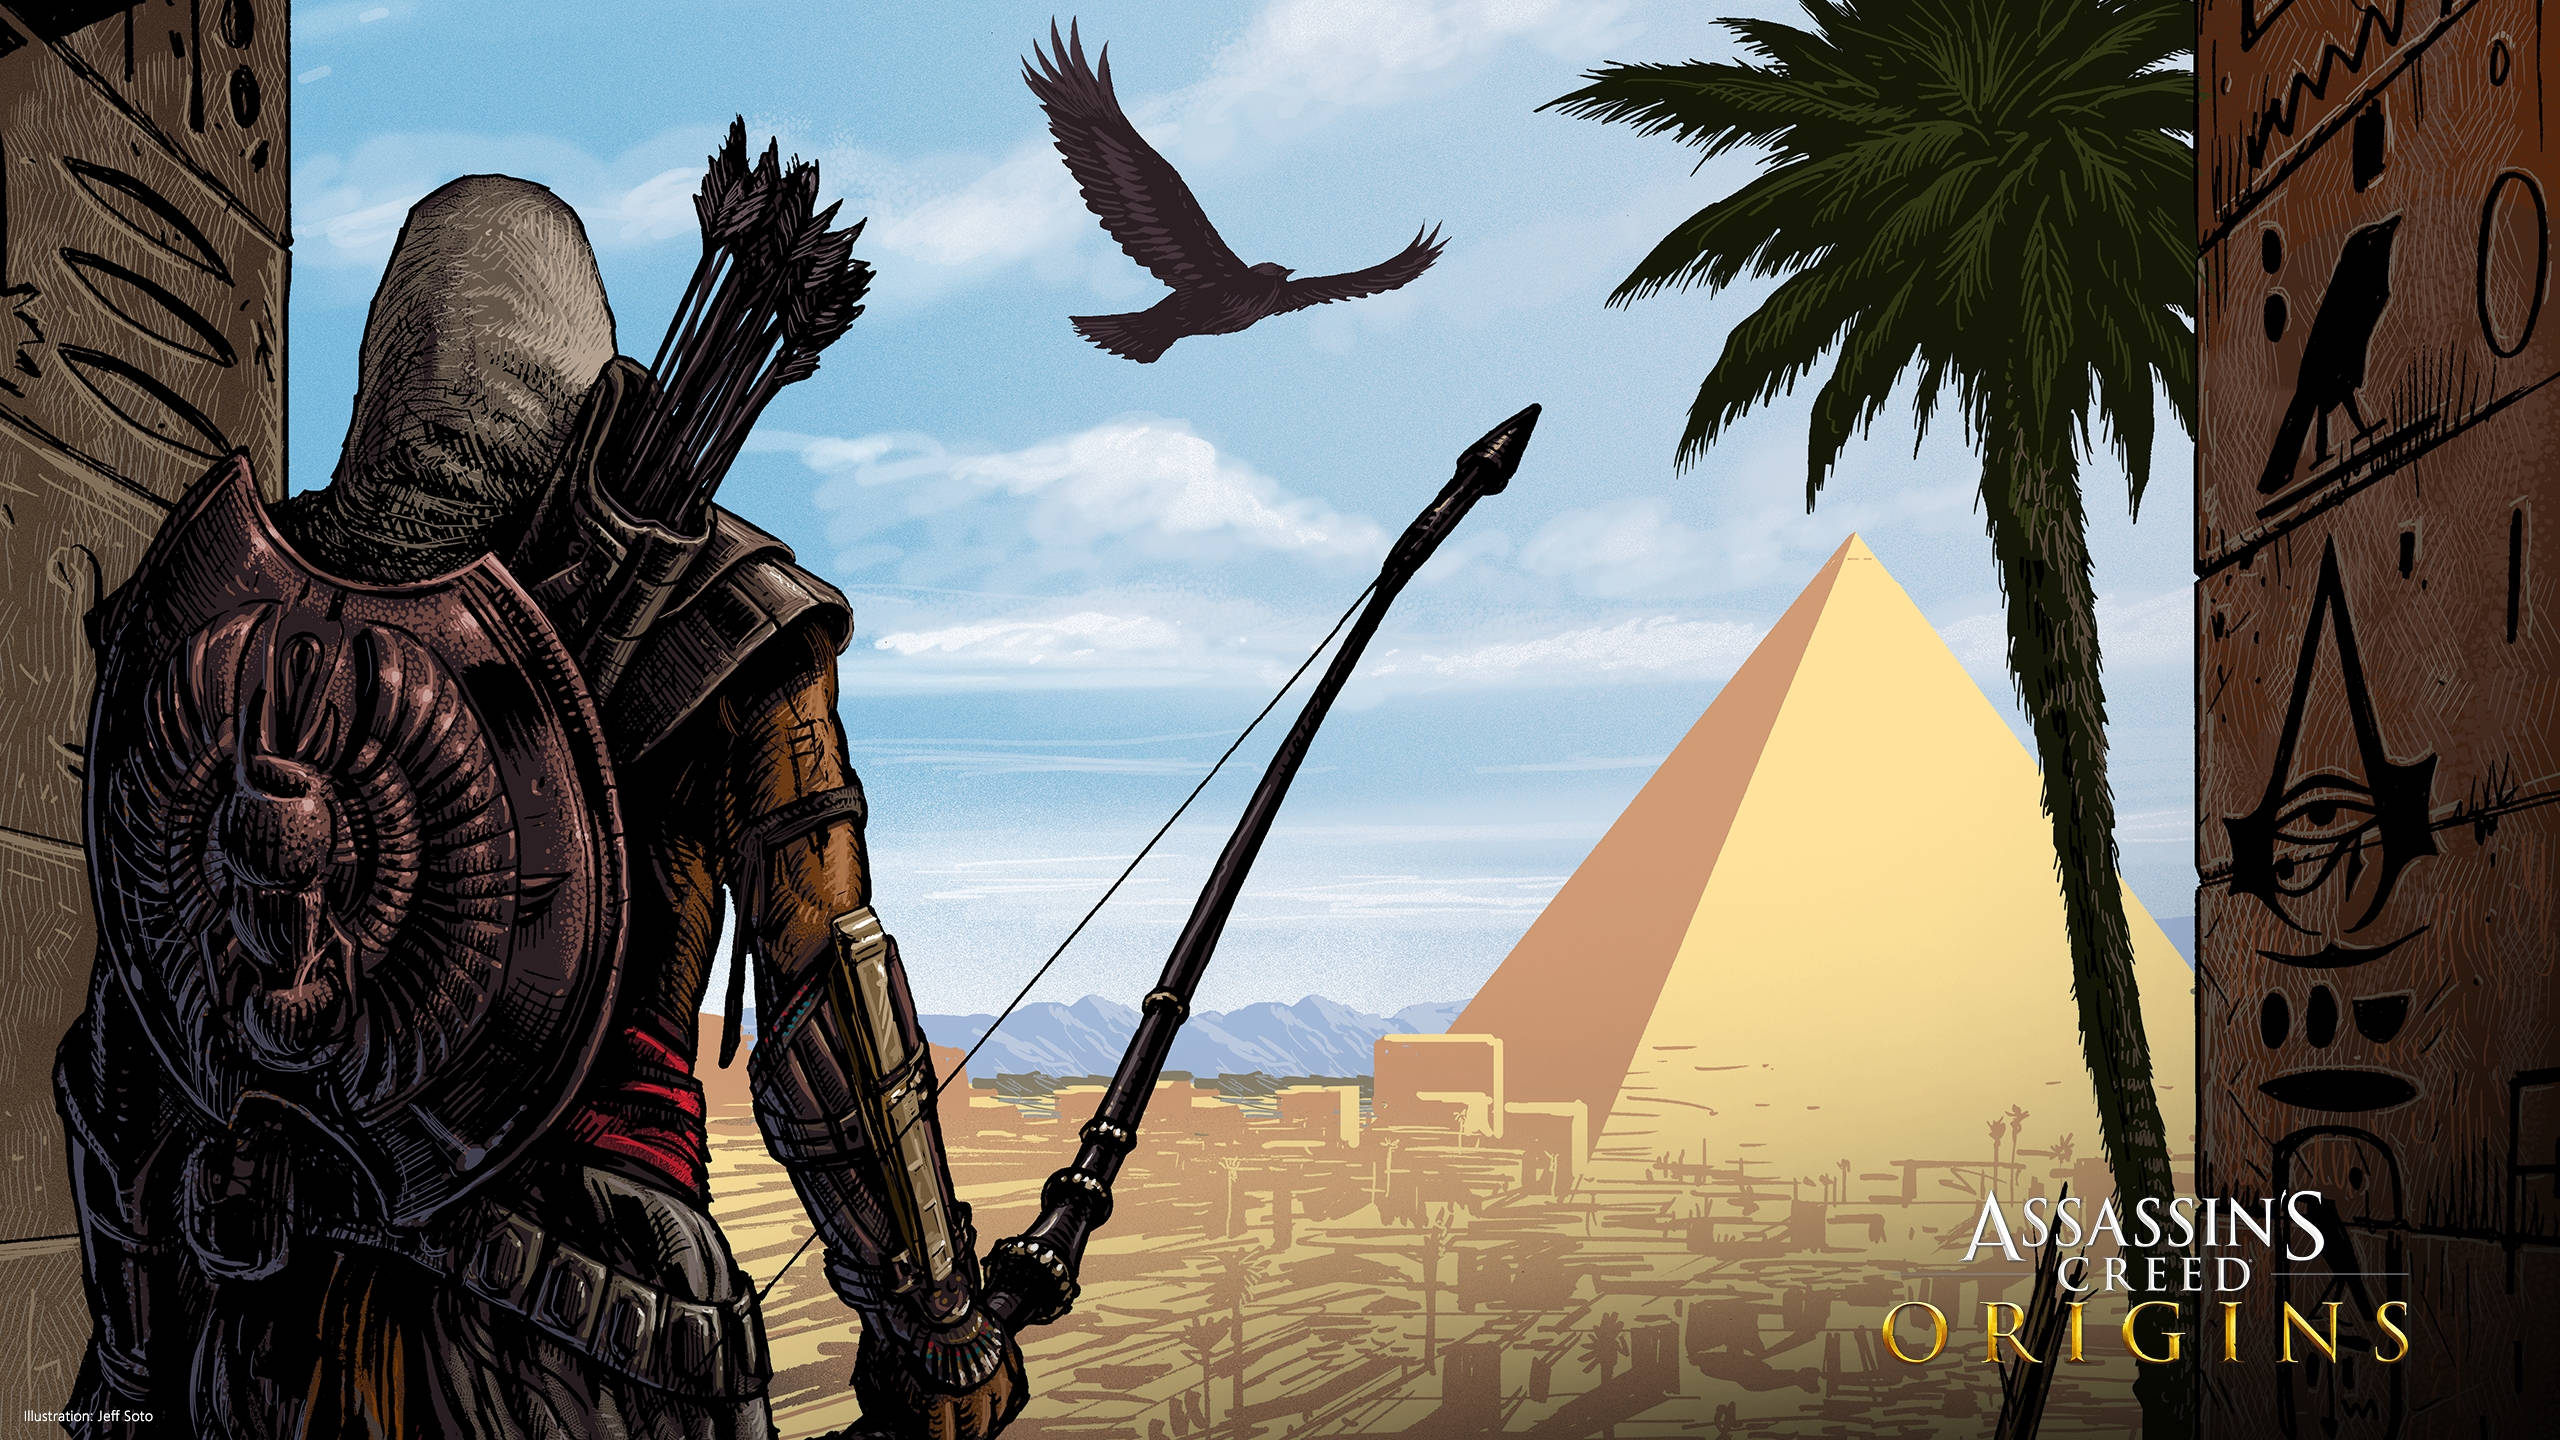 Download Assassins Creed Origins Bayek In The Desert Wallpaper | Wallpapers .com